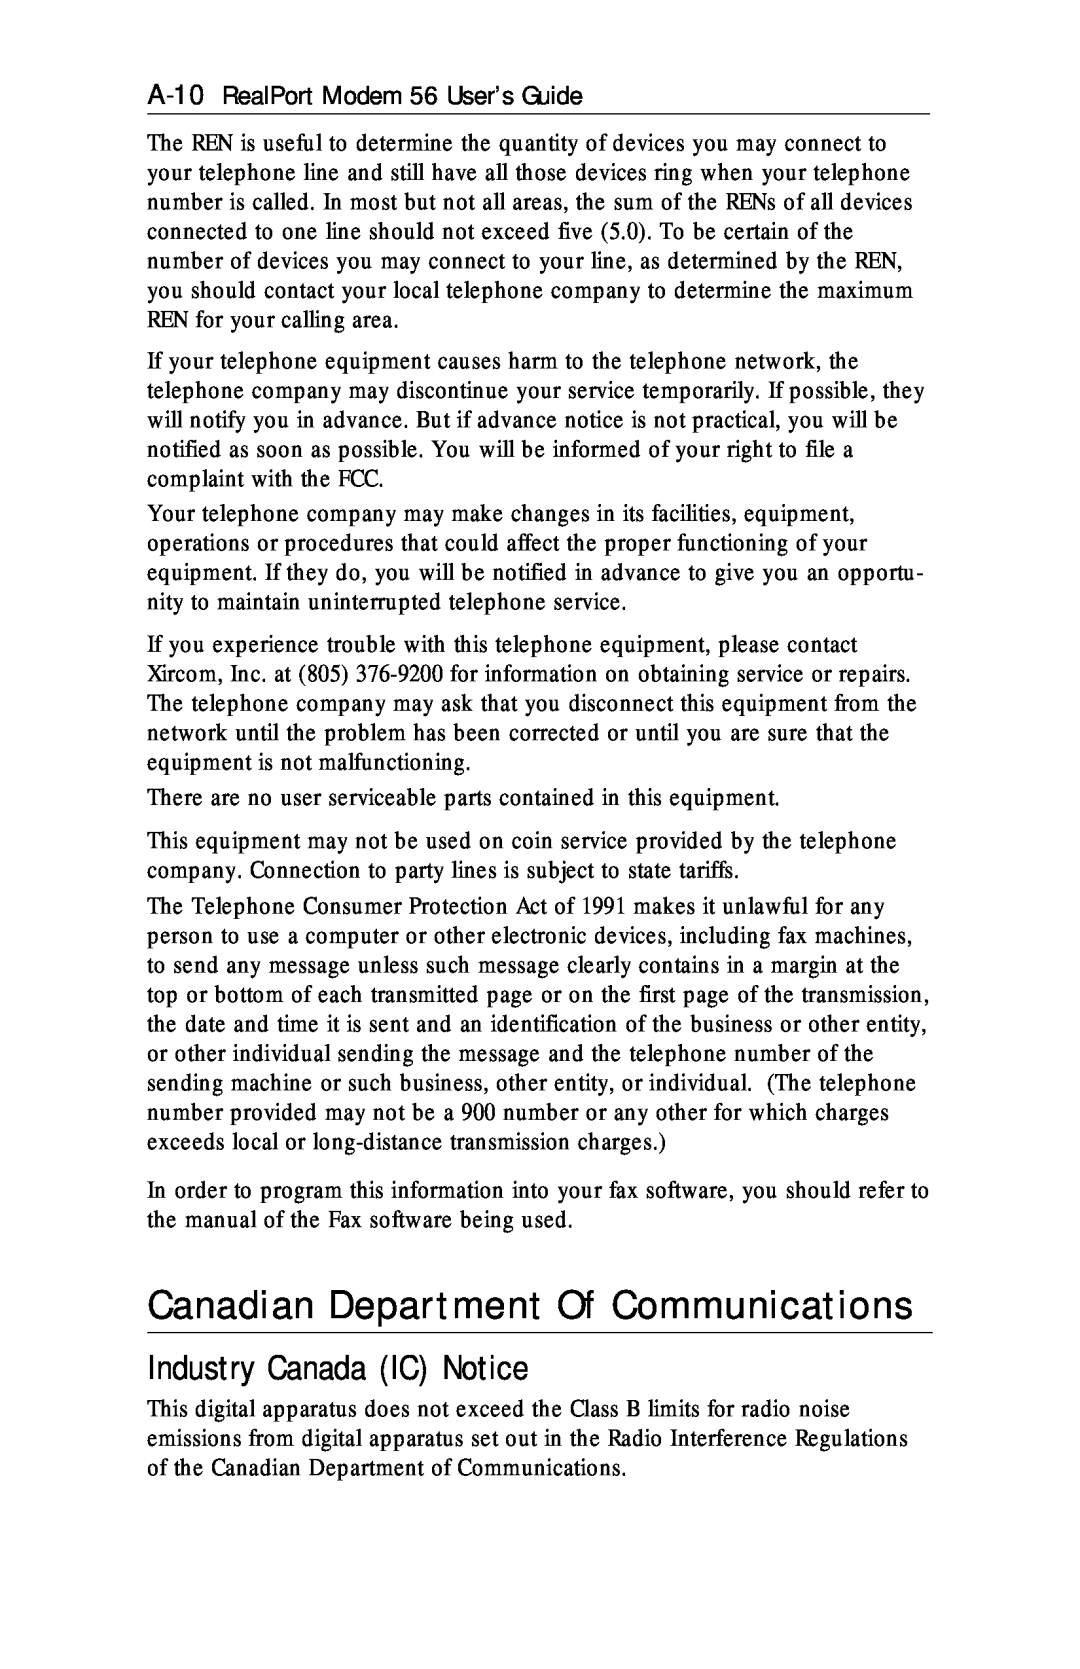 Xircom RM56V1 manual Canadian Department Of Communications, Industry Canada IC Notice 